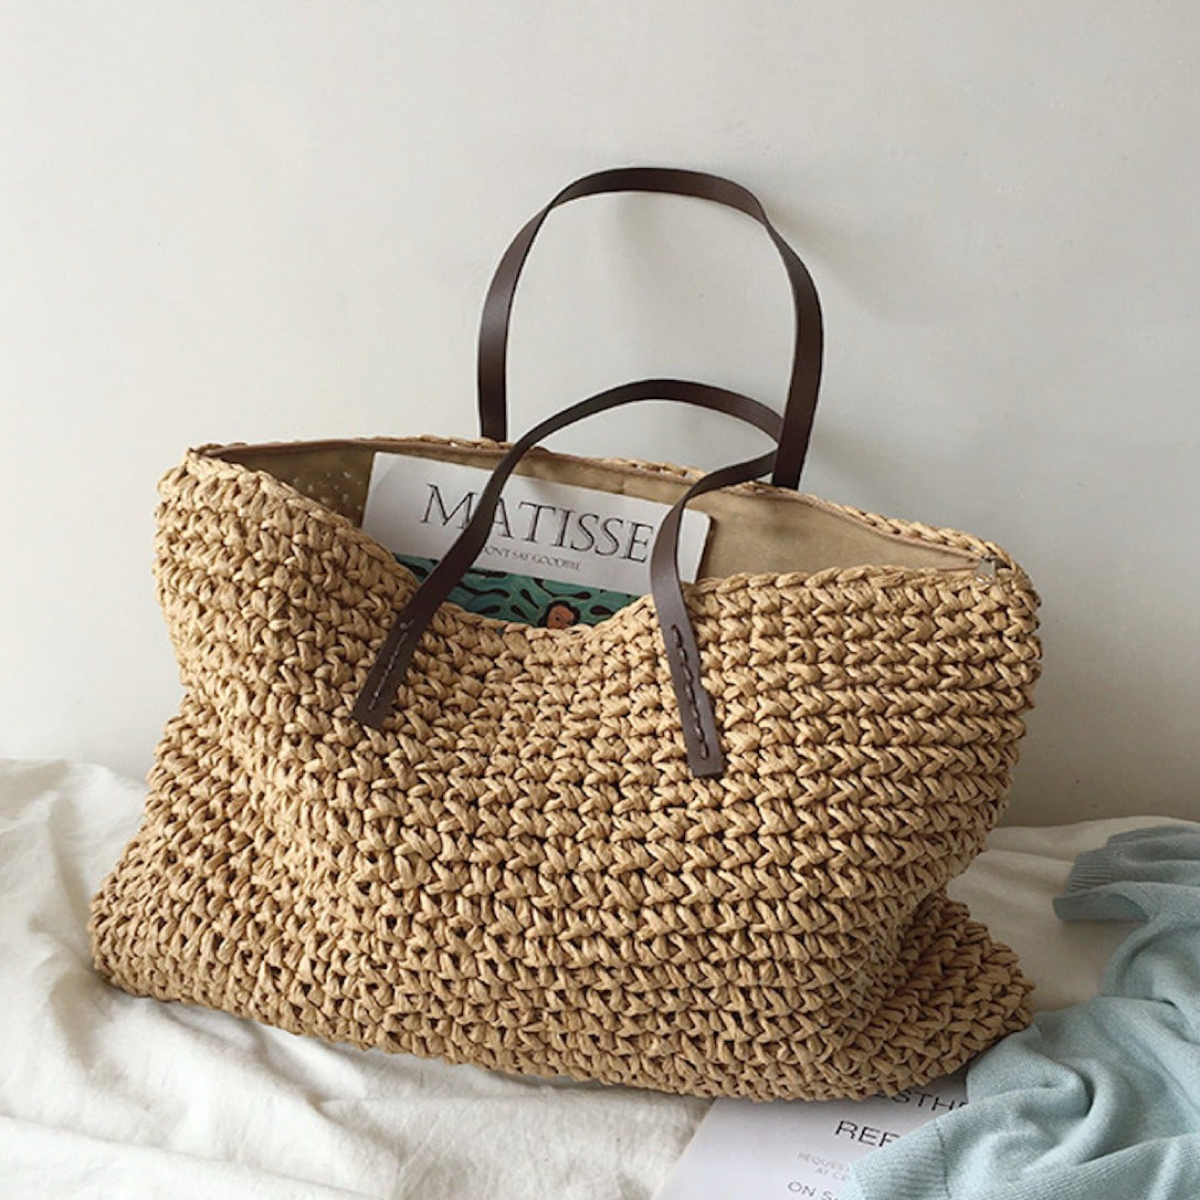 Elena Handbags Everyday Large Straw Woven Summer Bag